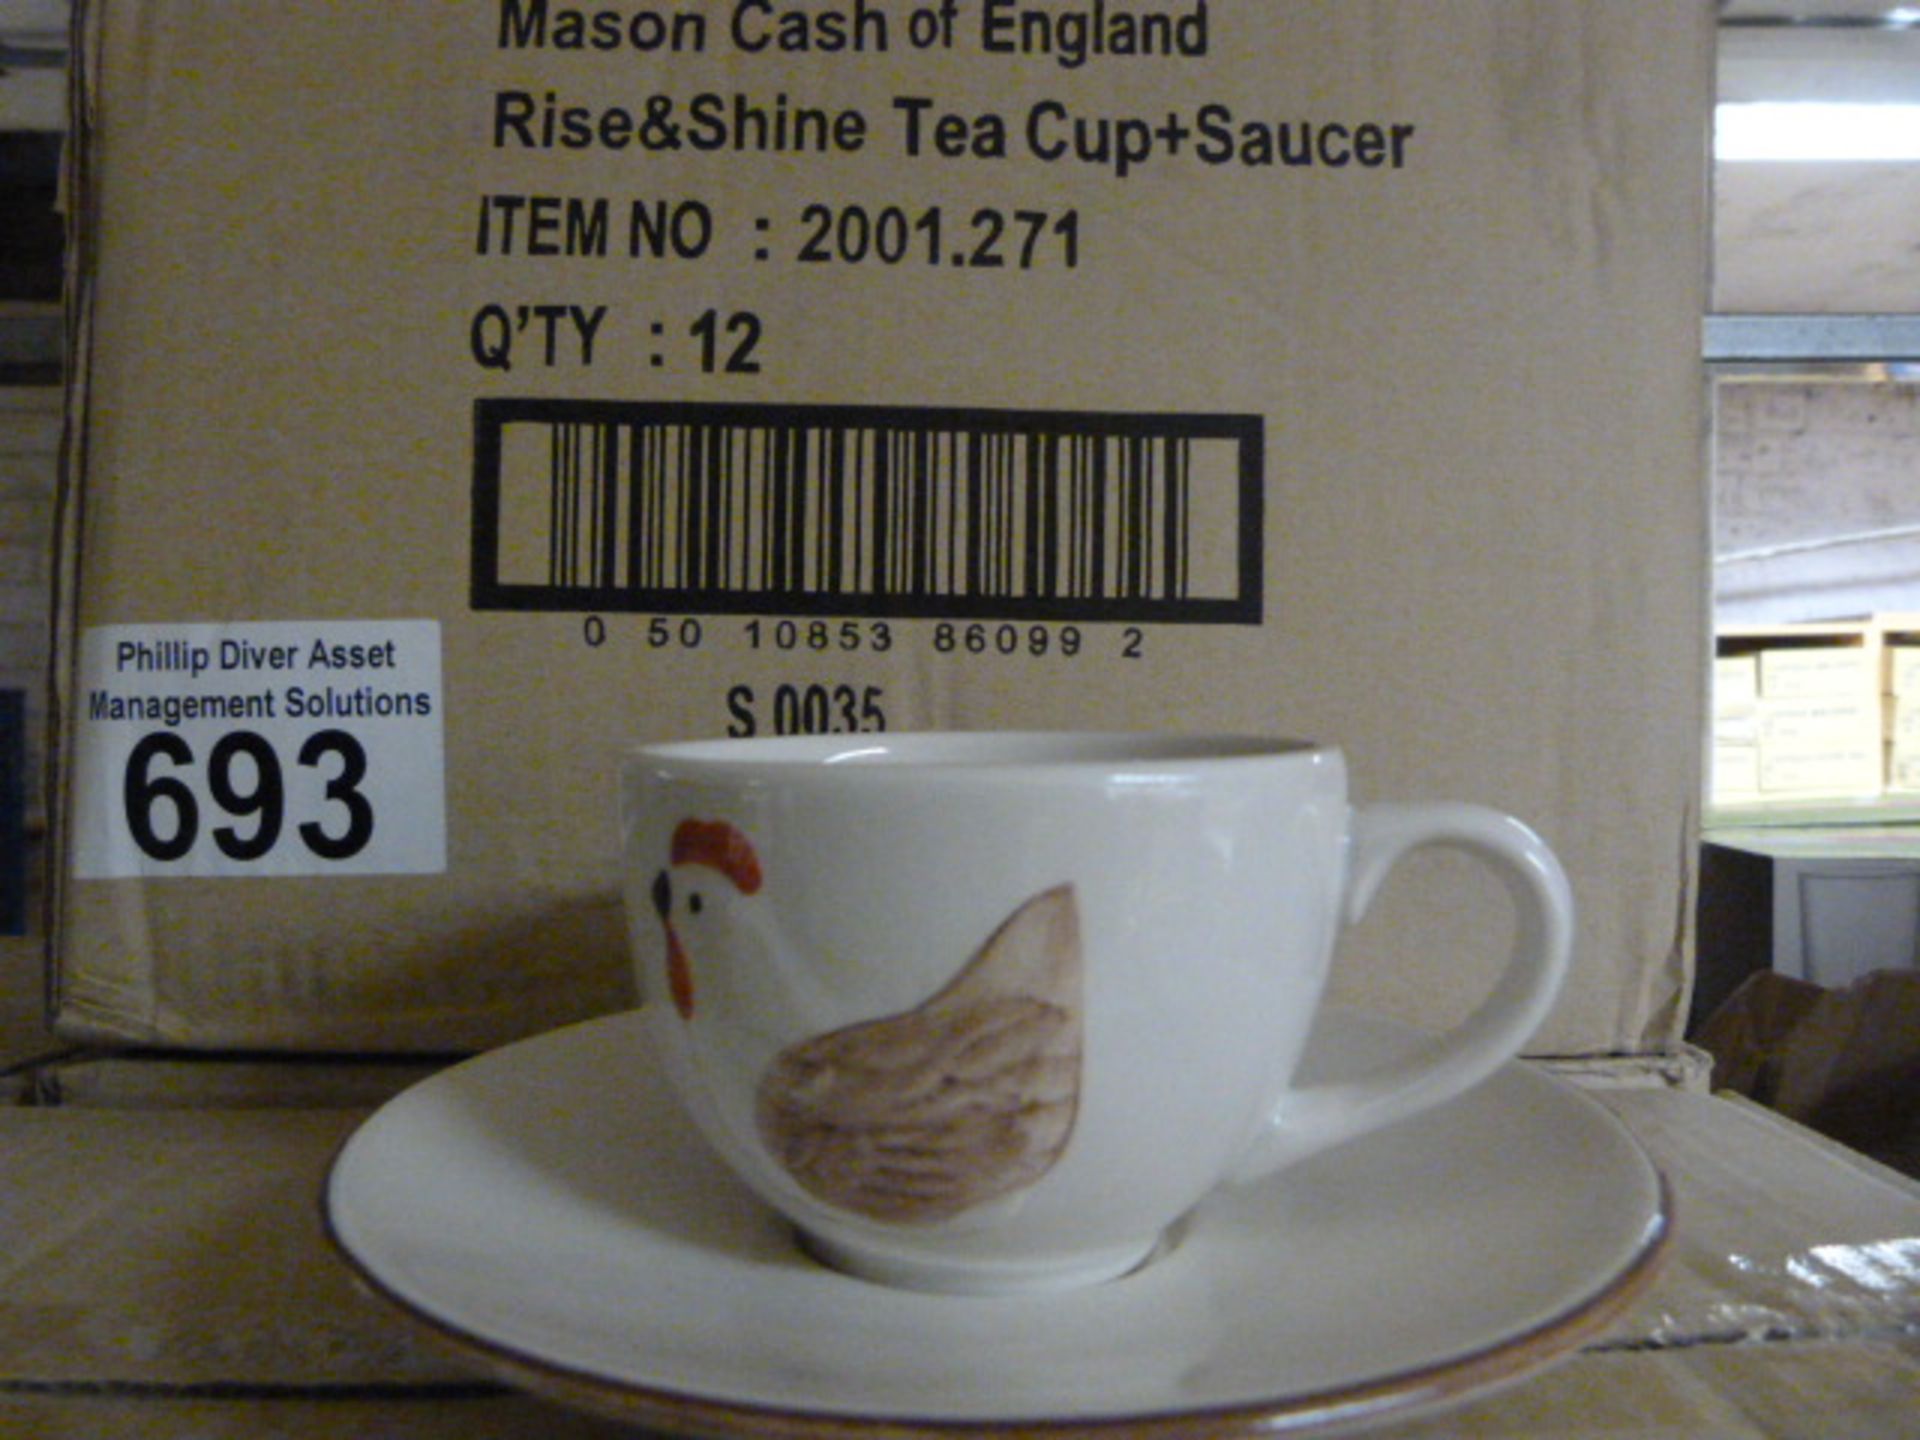 *Box of 12 Rise & Shine Teacups & Saucers